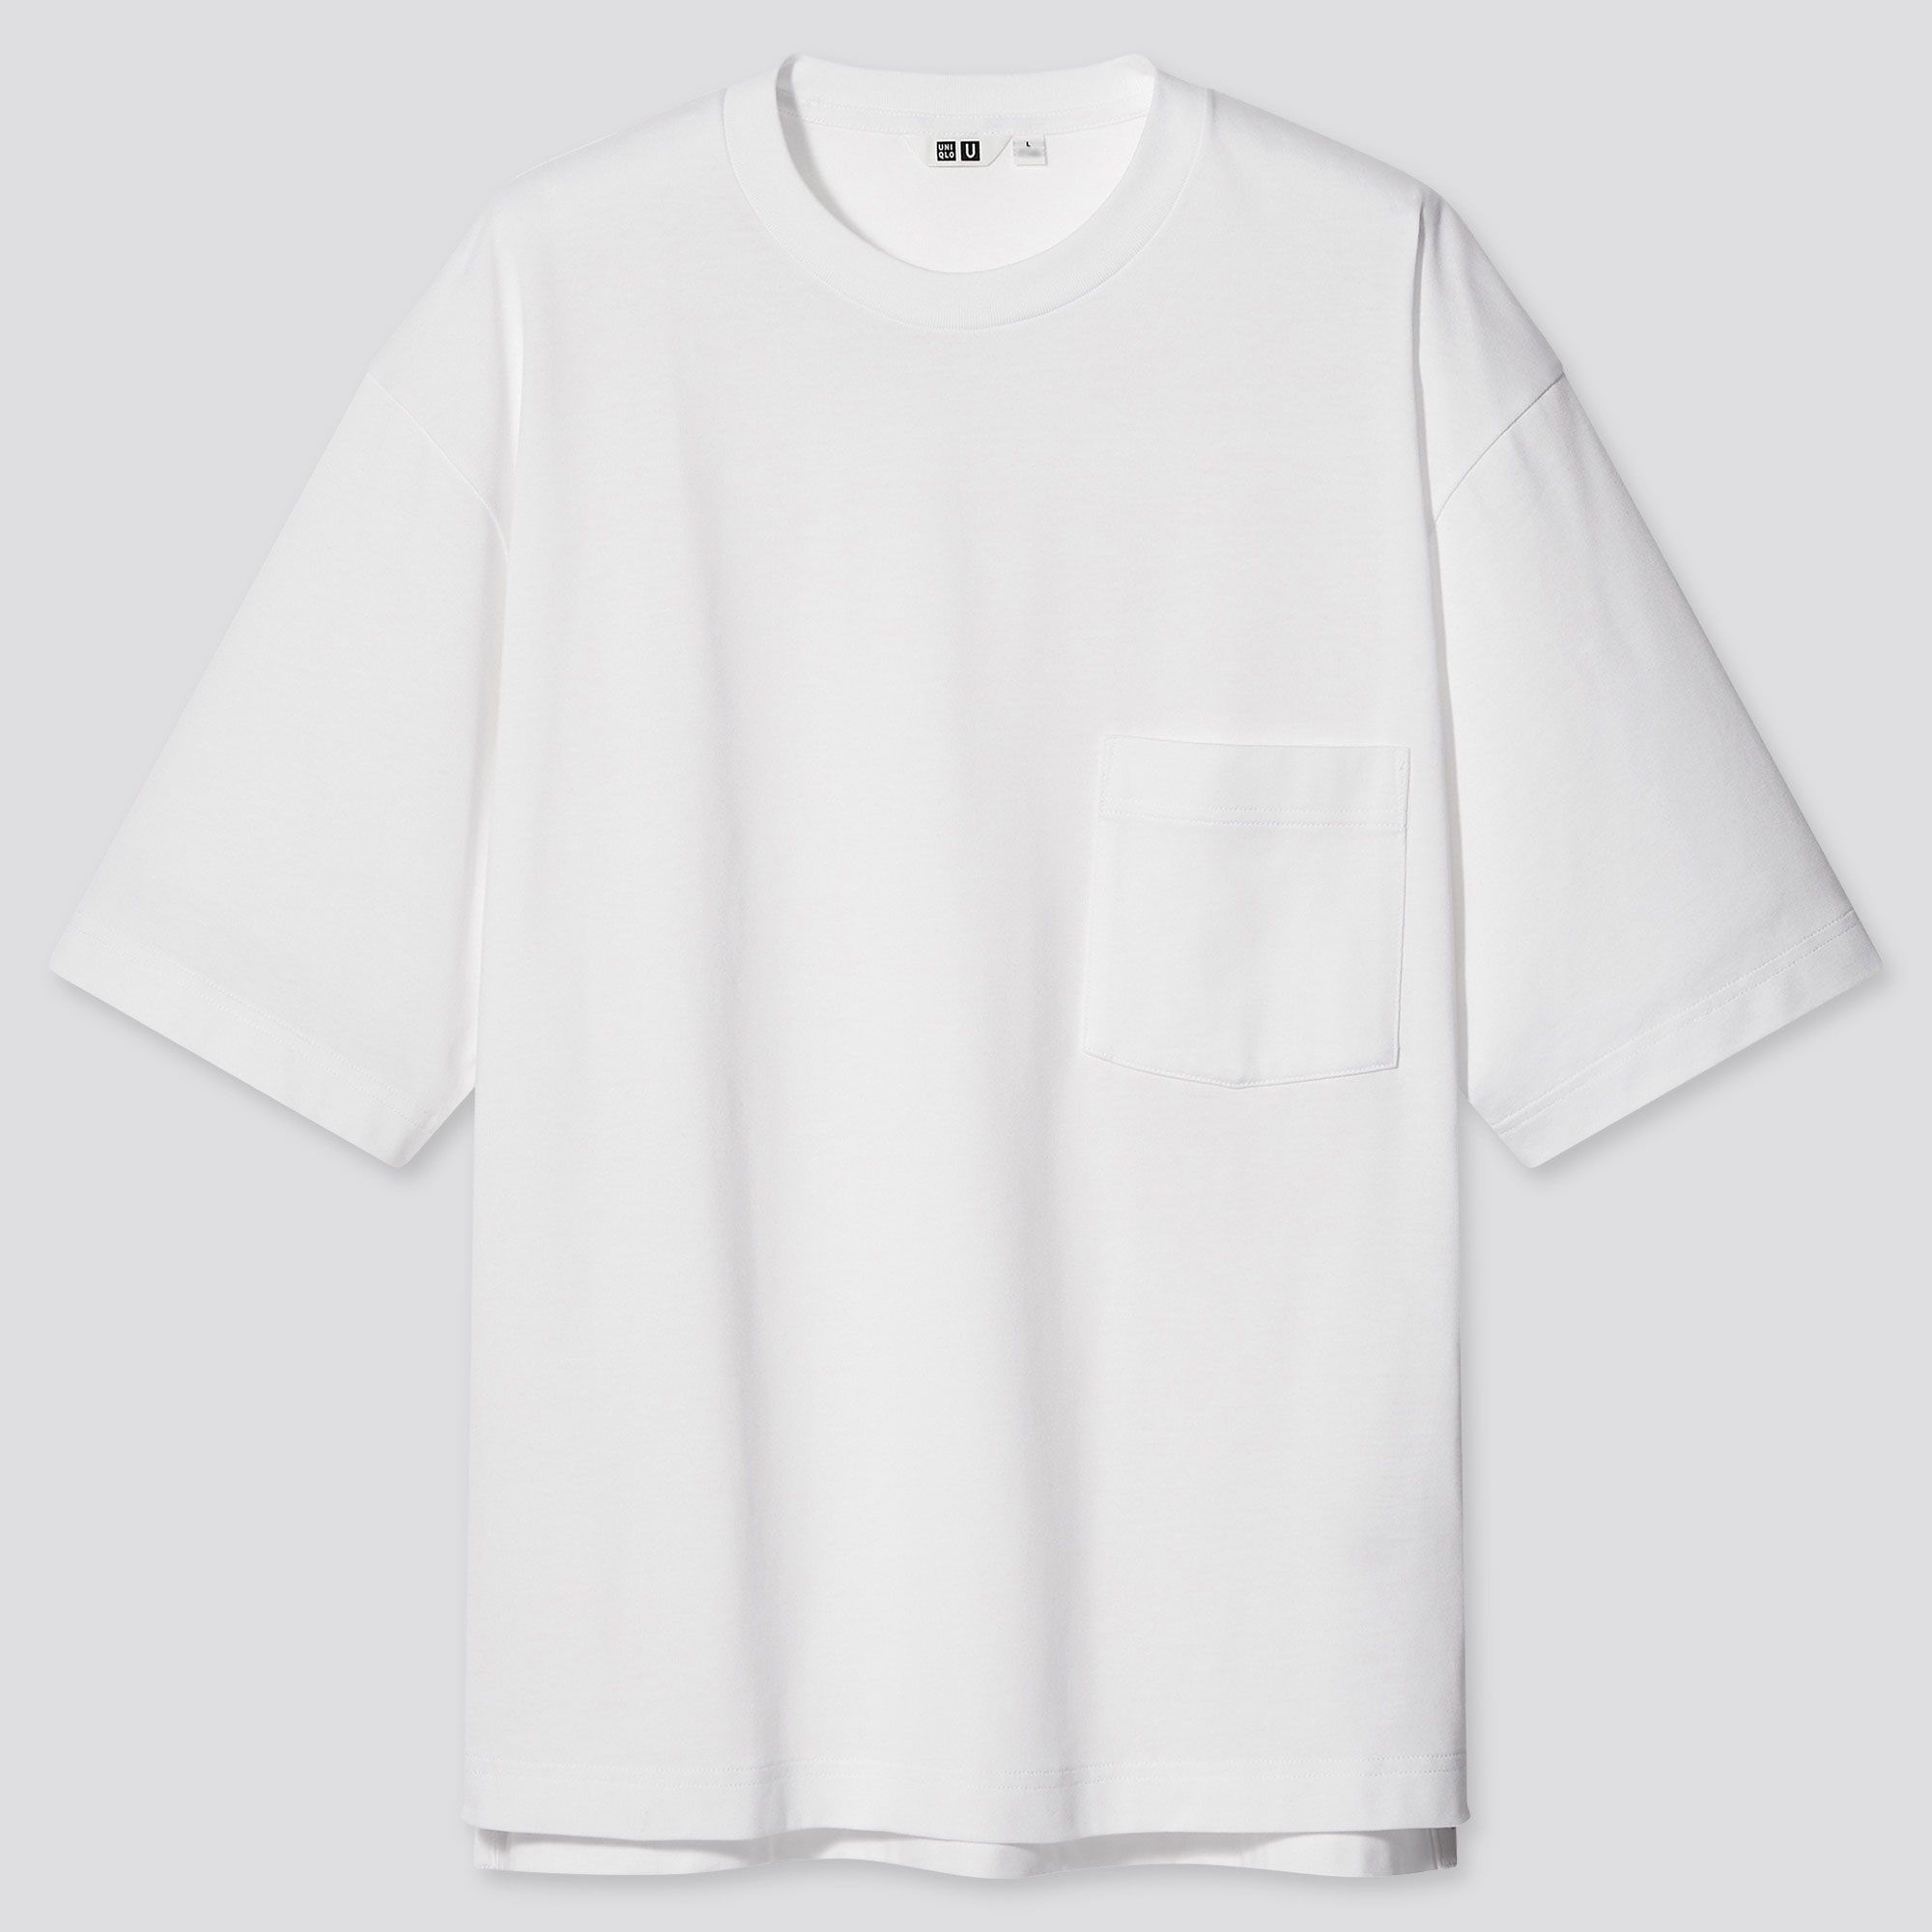 plain white baggy t shirt